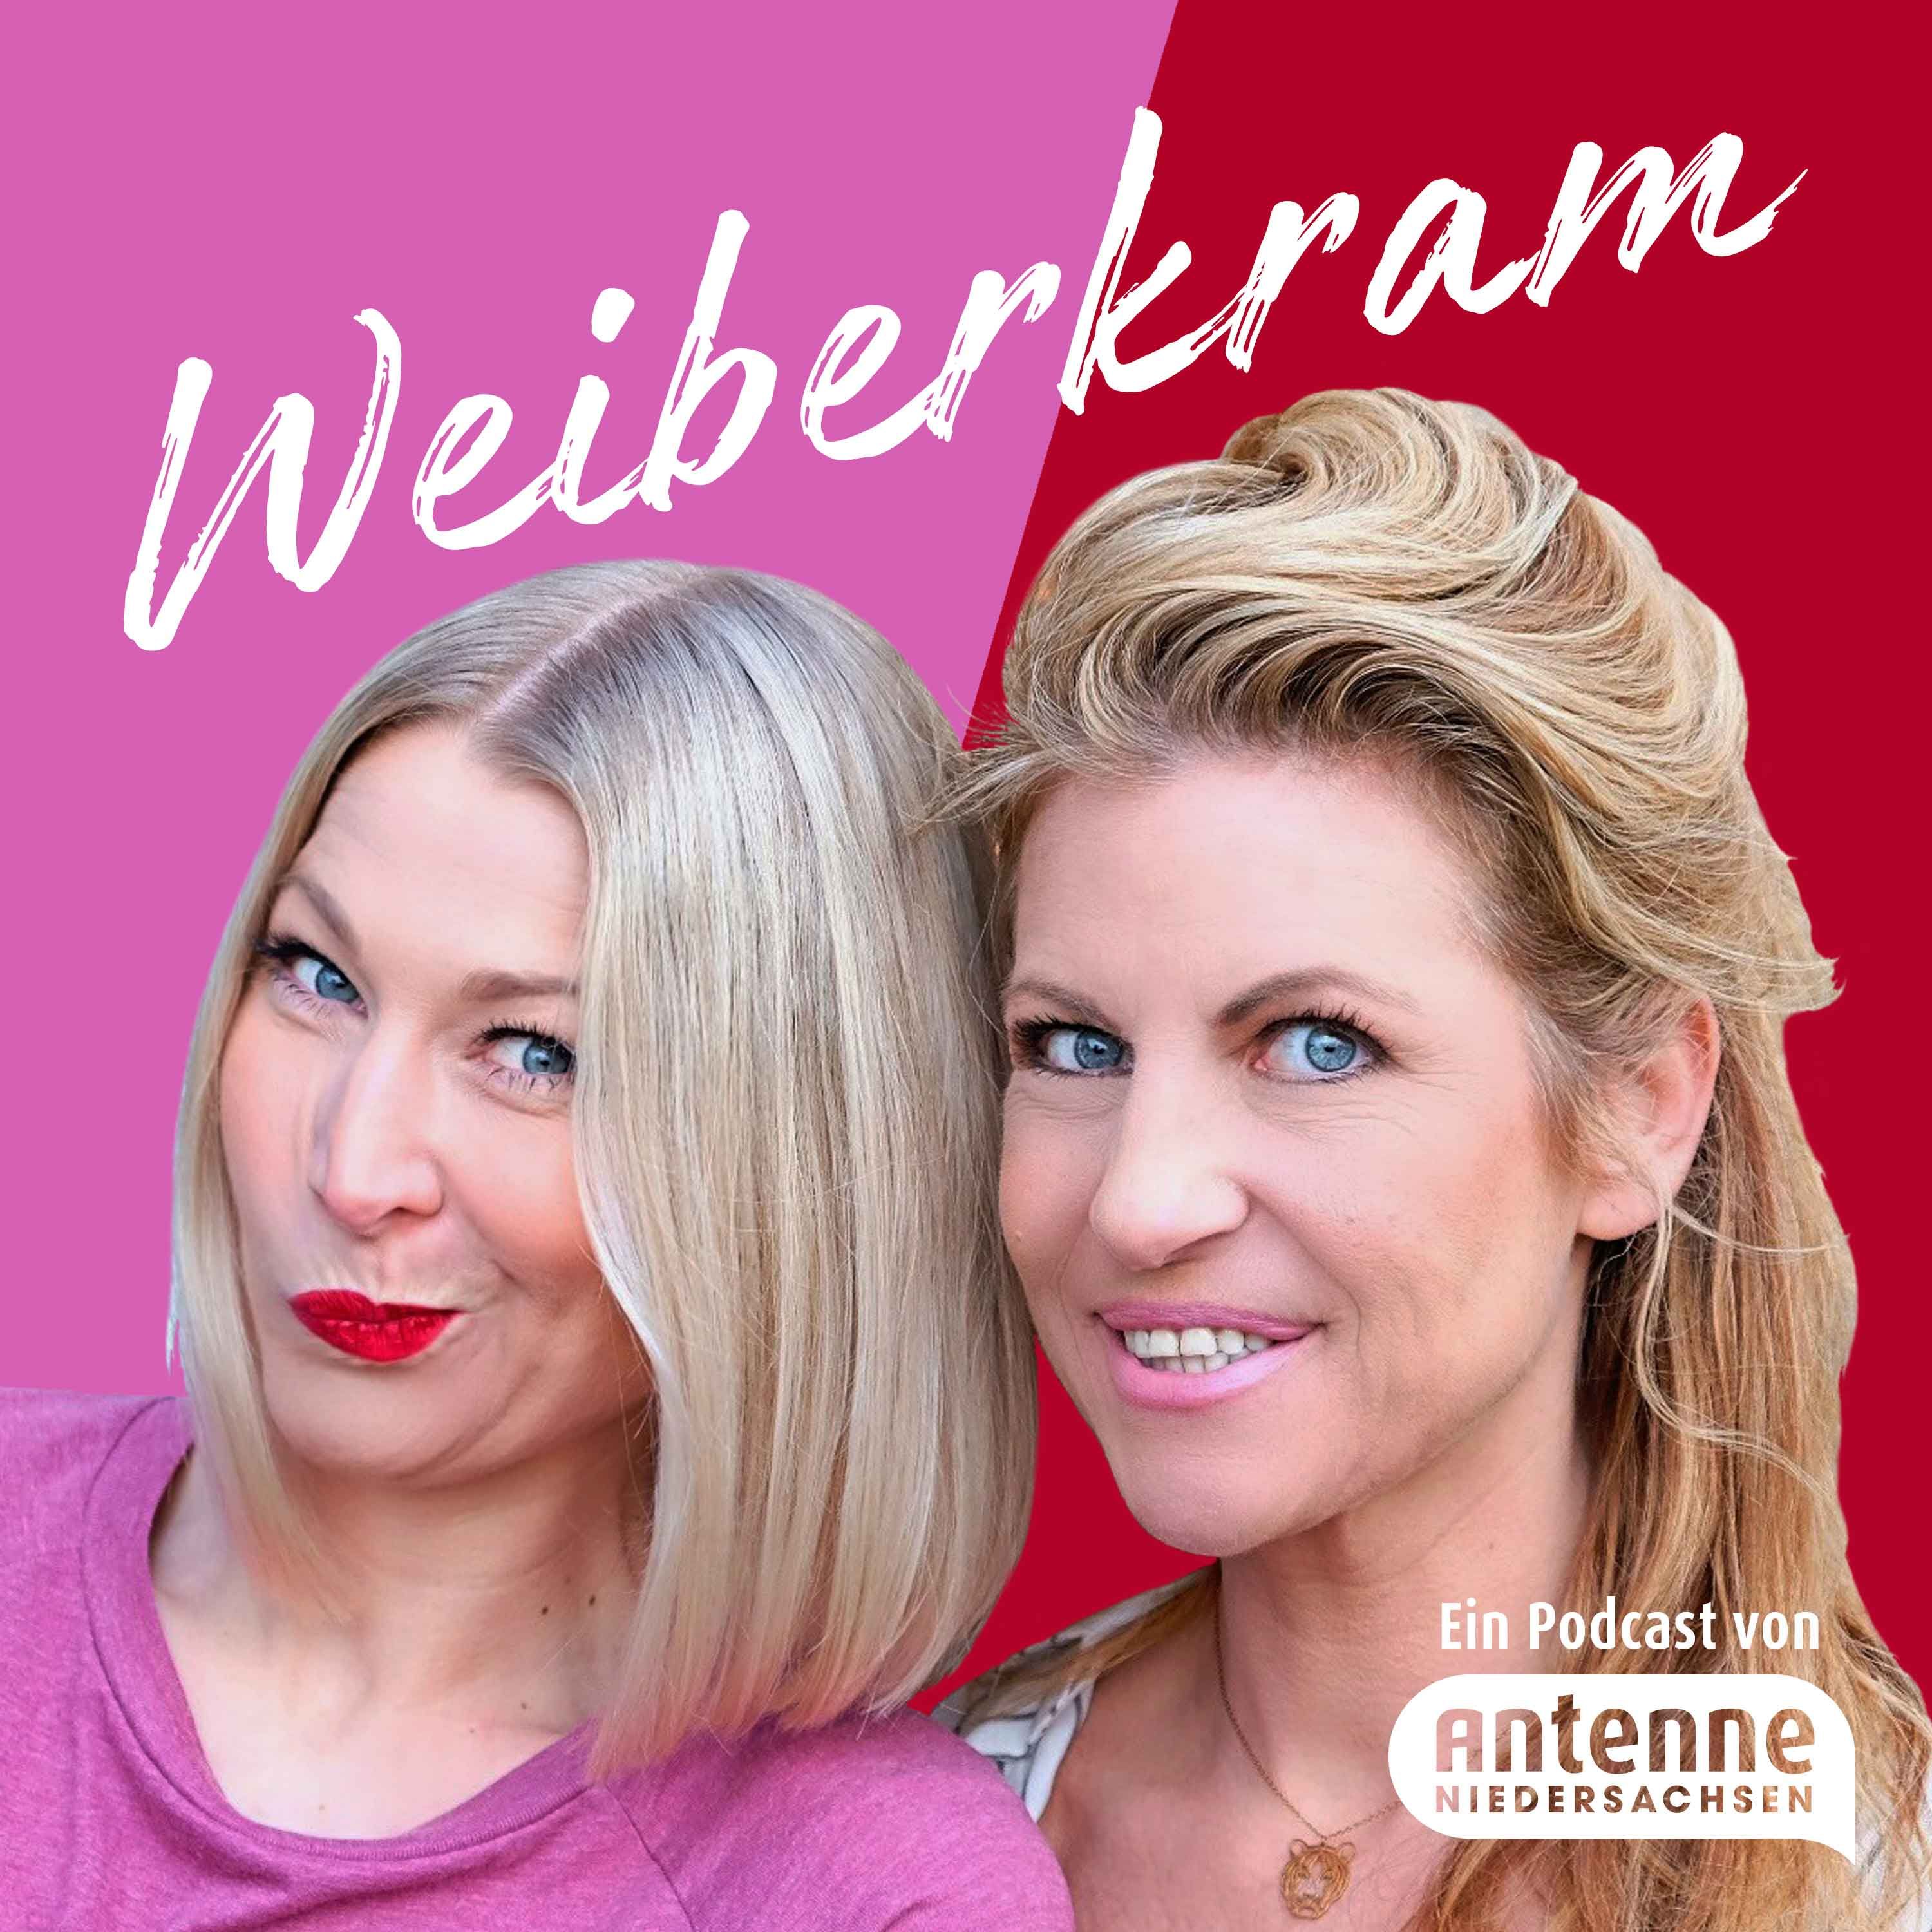 Weiberkram - Podcast